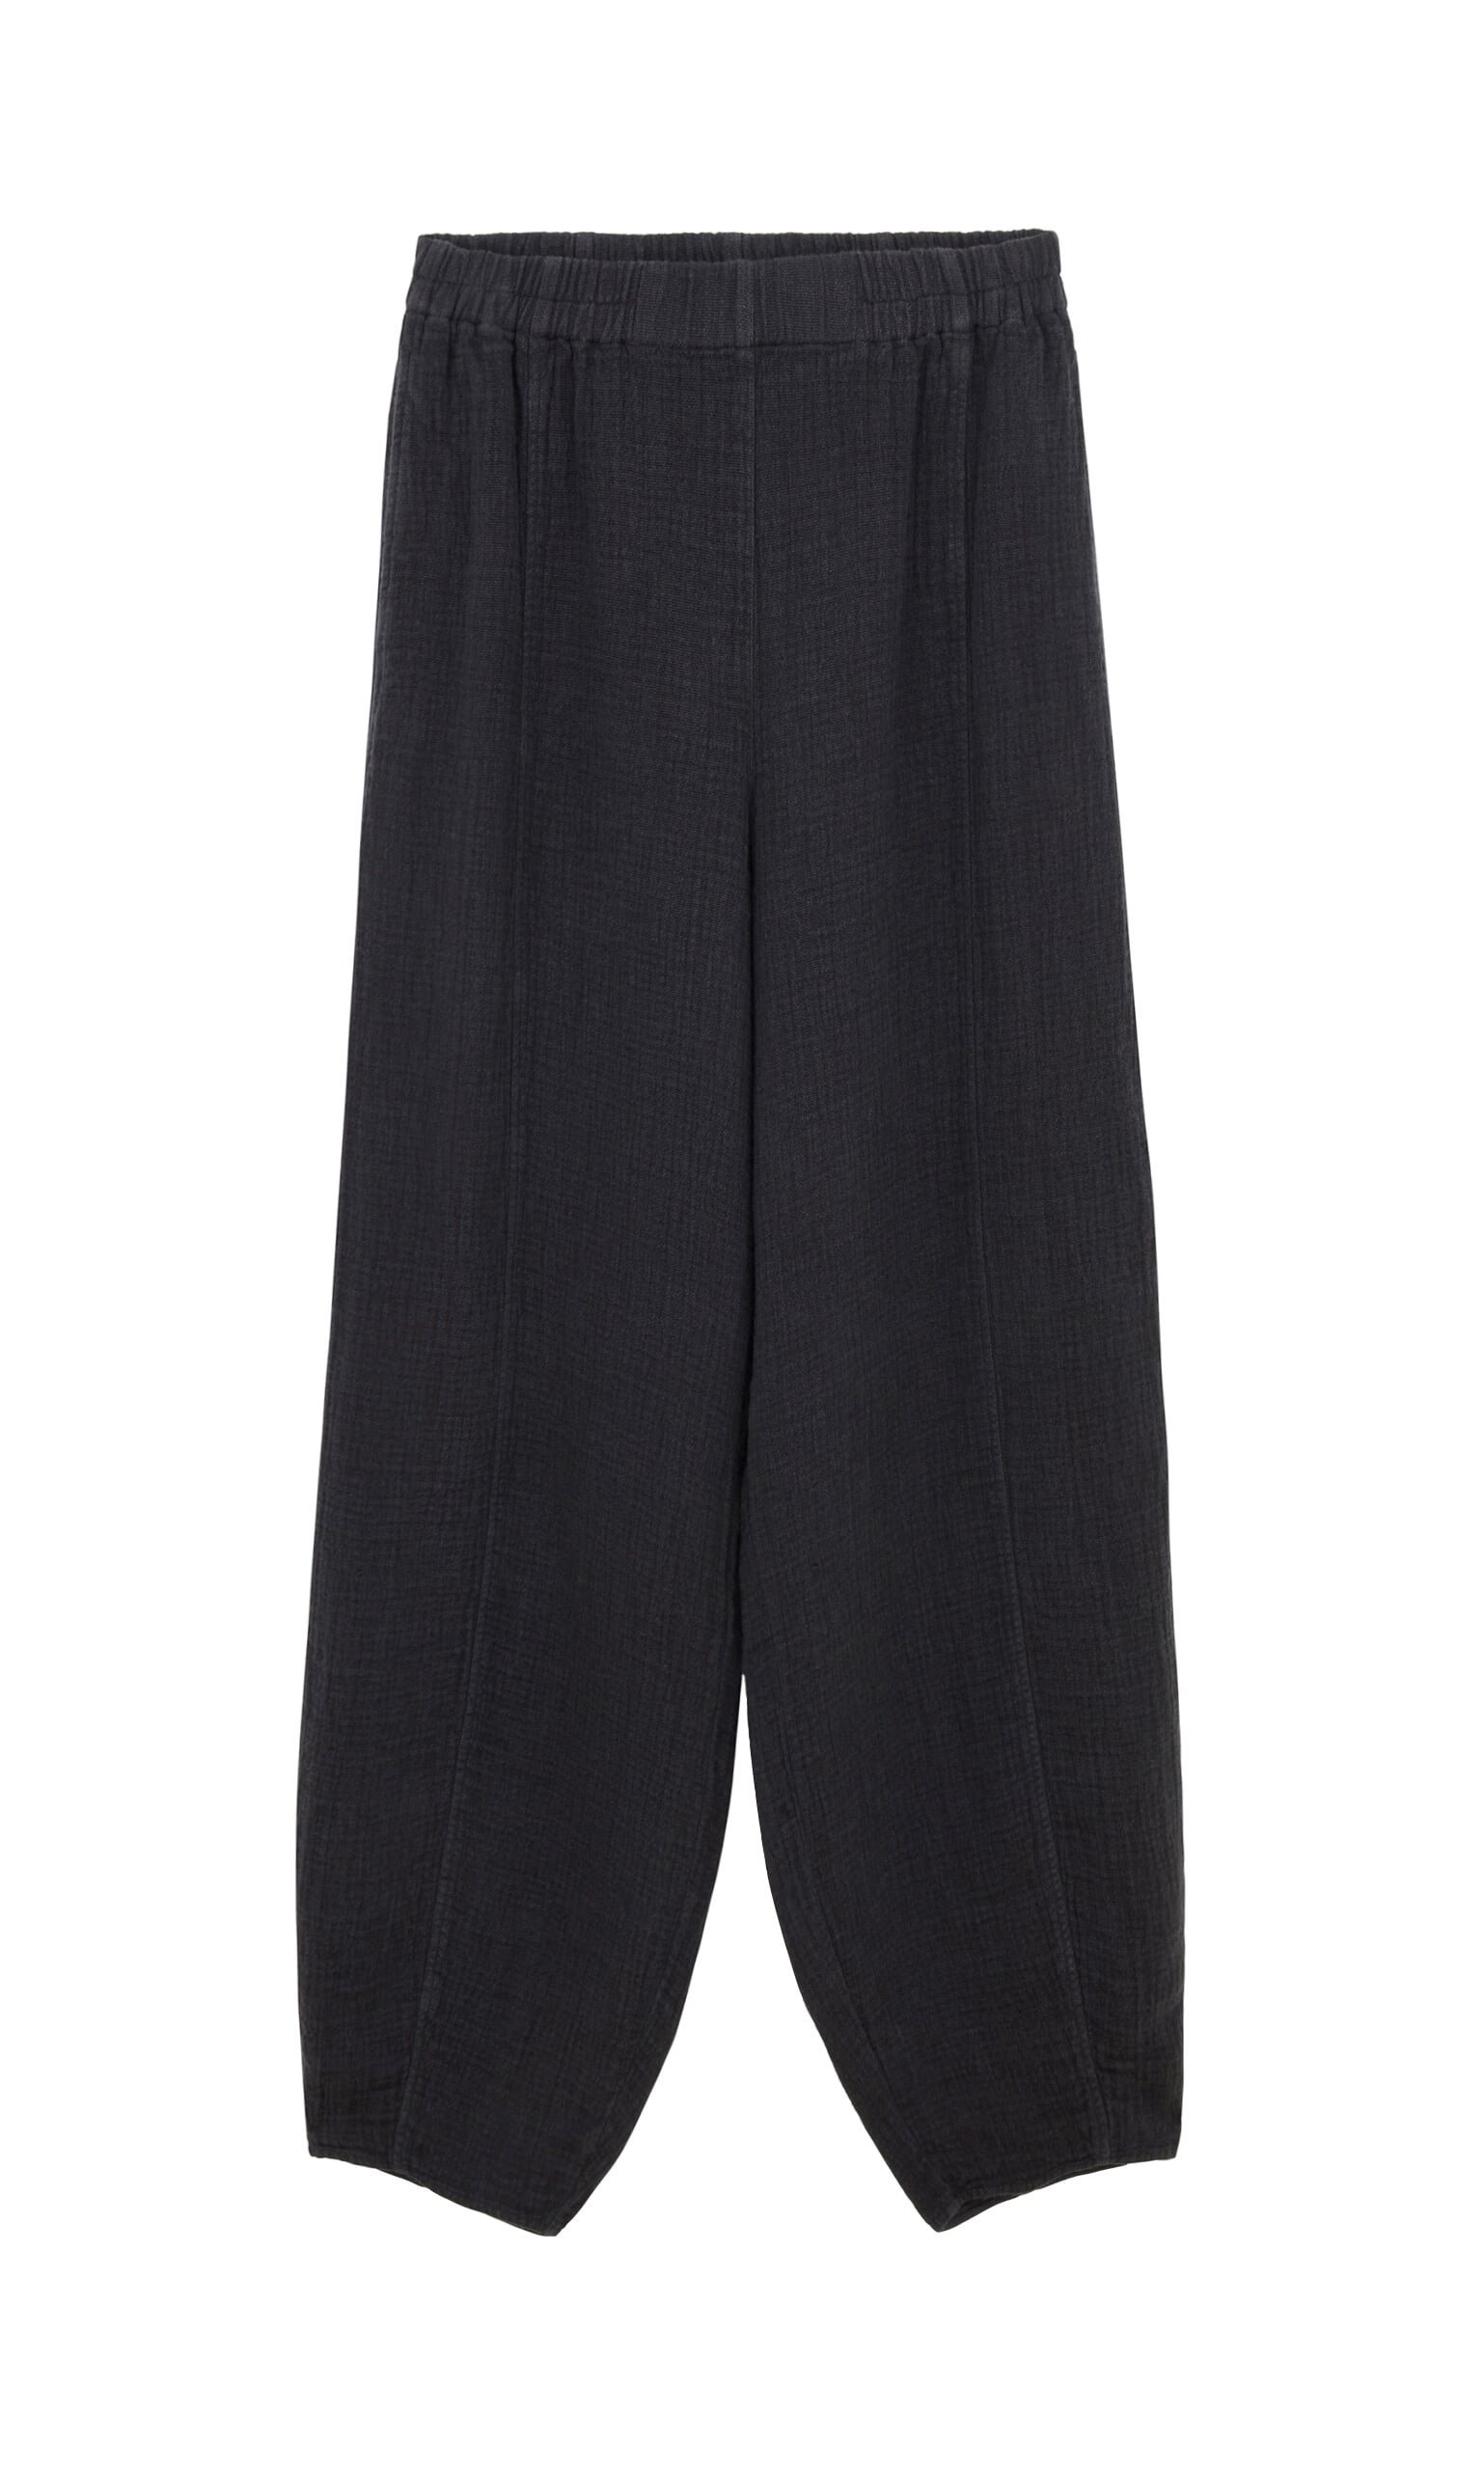 Gray crinkle trousers - Plümo Ltd